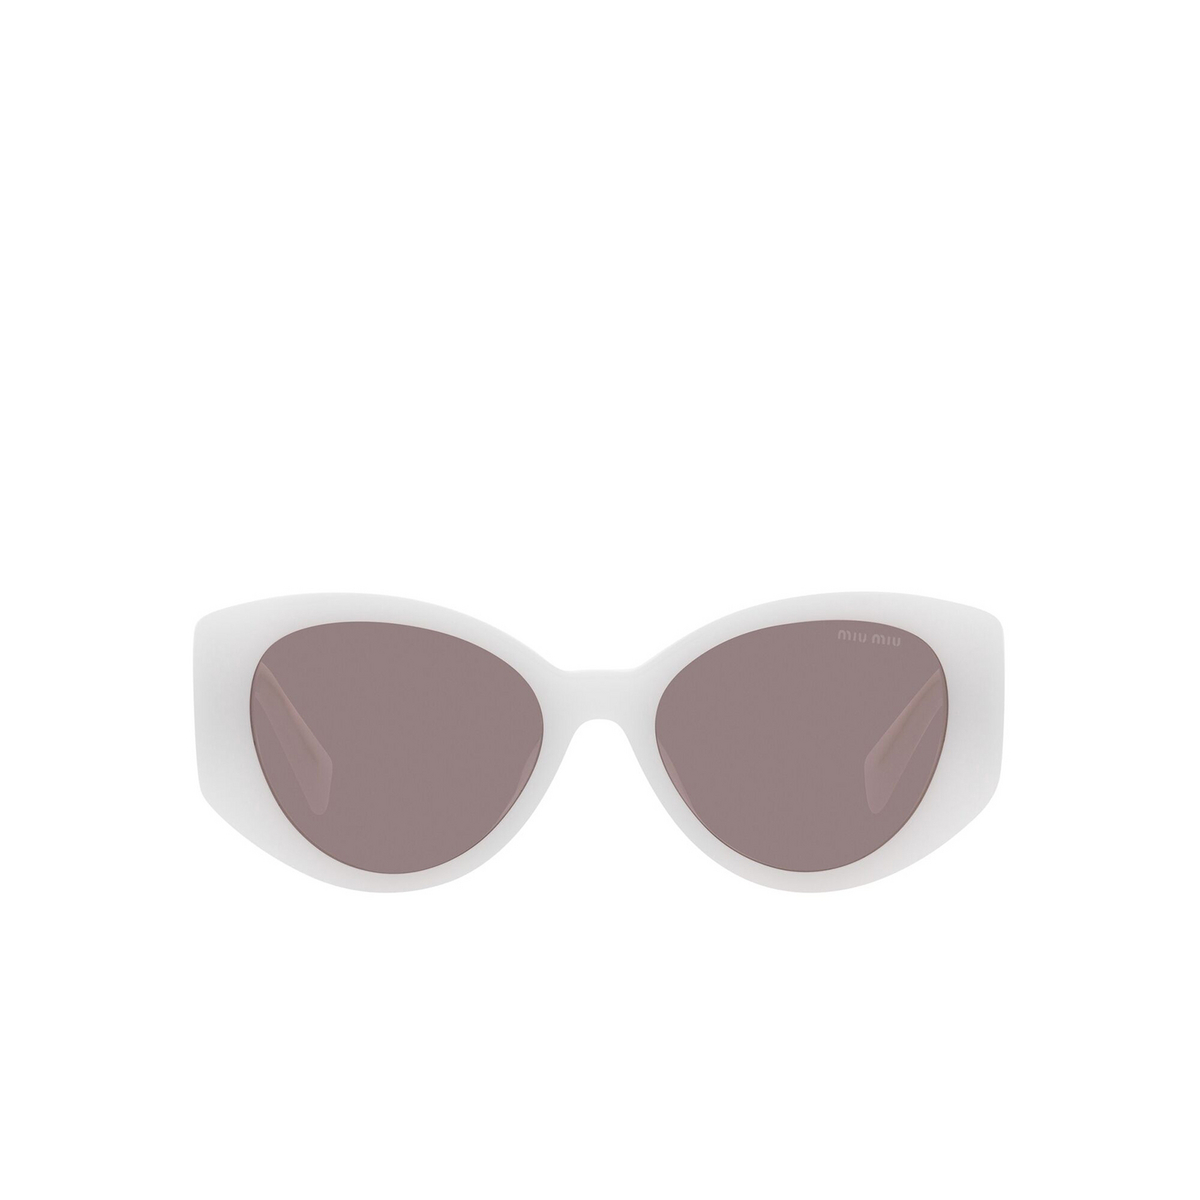 Miu Miu® Cat-eye Sunglasses: MU 03WS color White Opal 05X05P - front view.